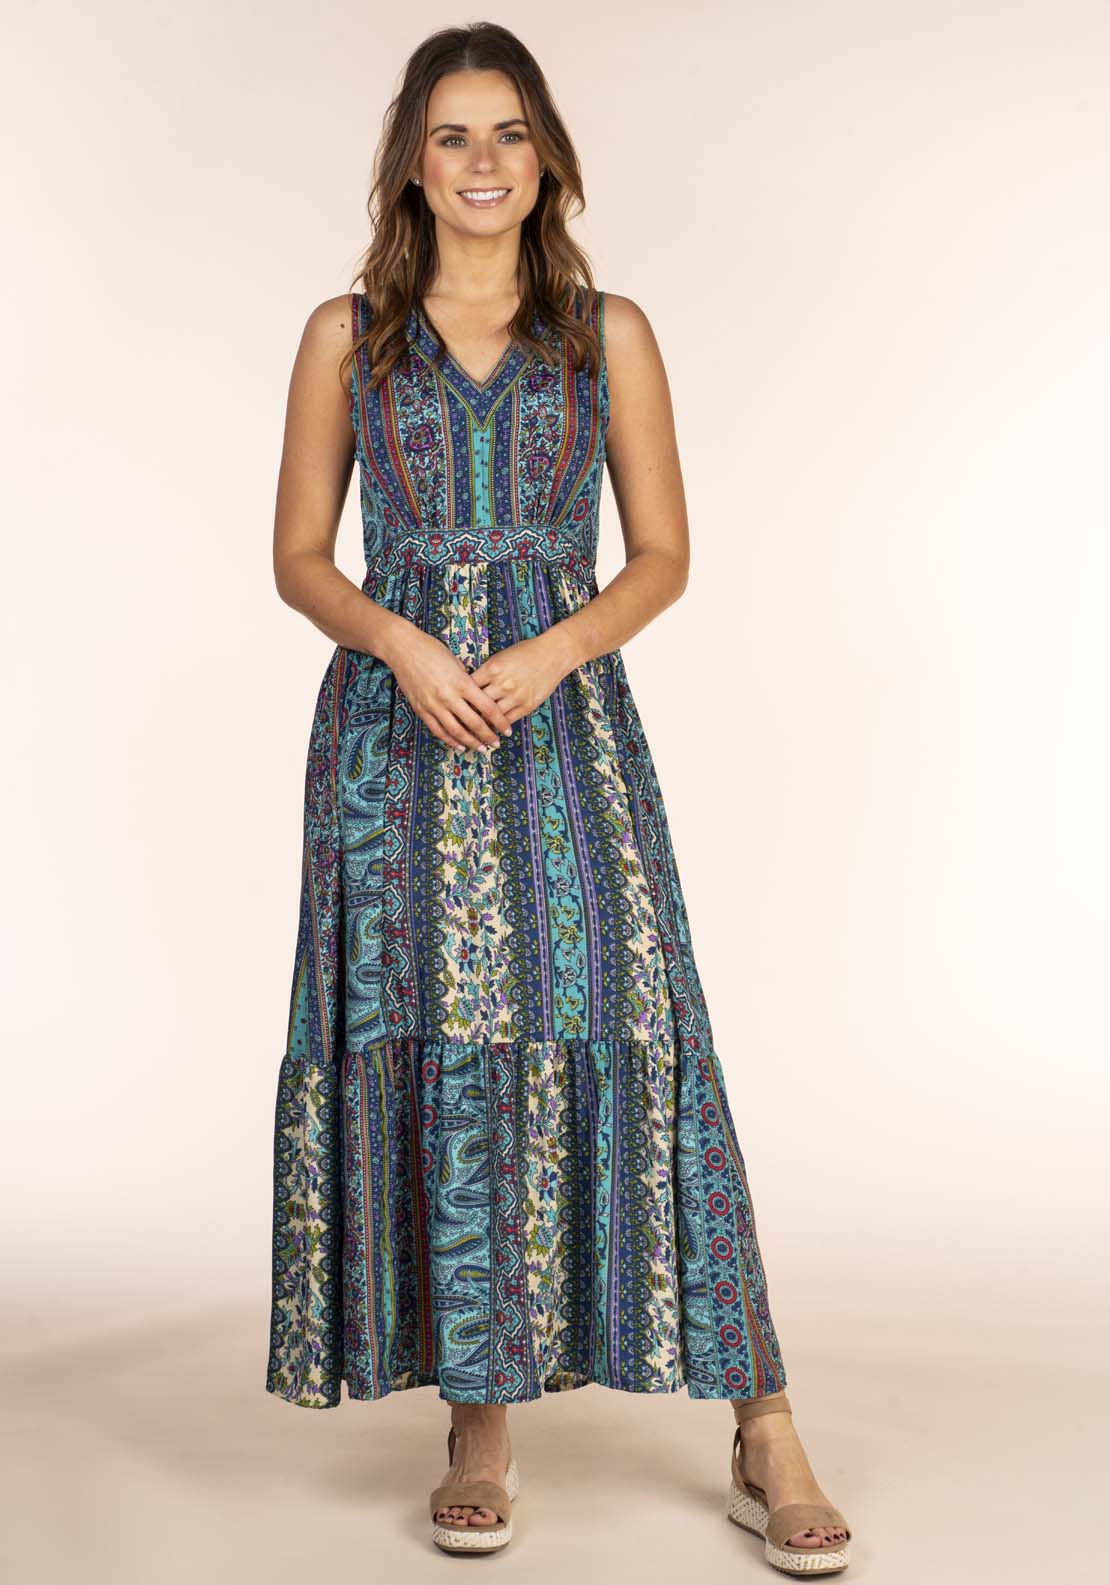 Naoise Sleeveless Tier Dress - Blue 1 Shaws Department Stores